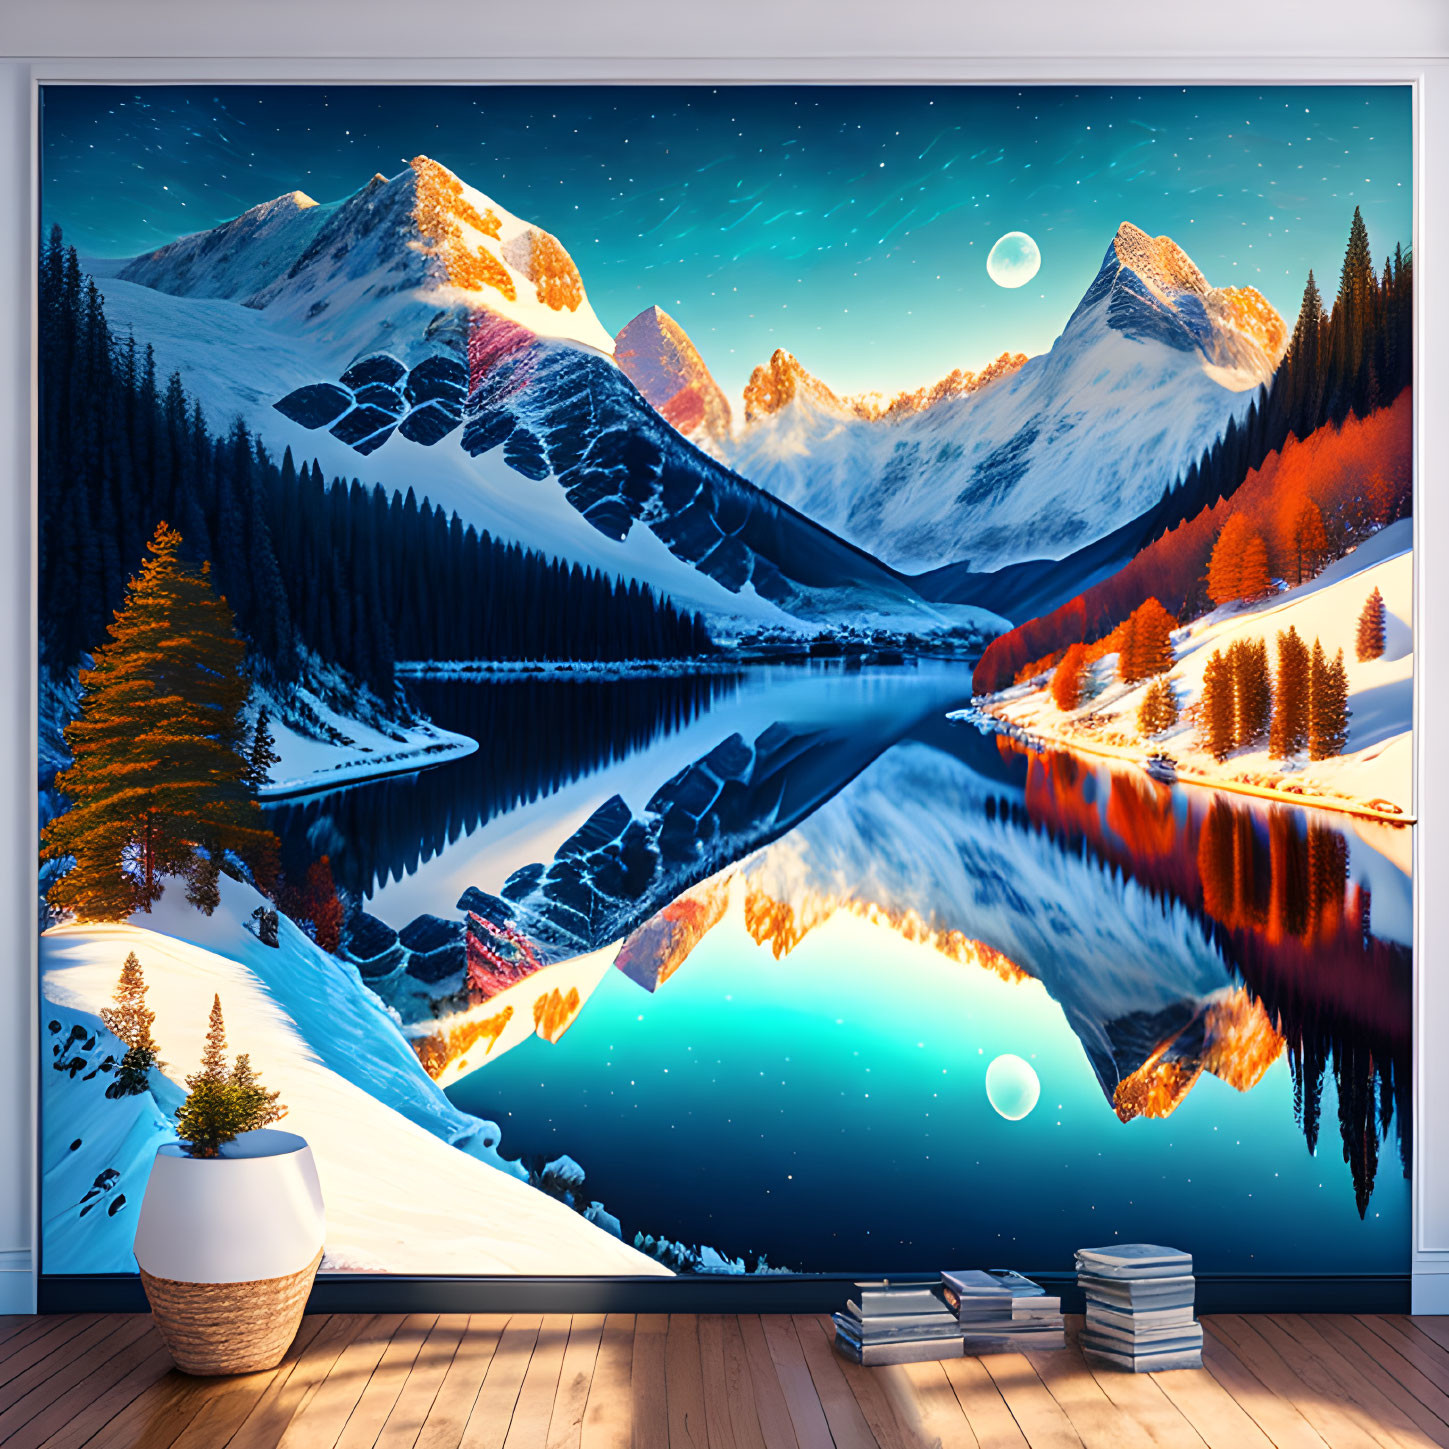 Digital Artwork: Snow-Capped Mountains, Starry Night Sky, Full Moon, Autumn Trees